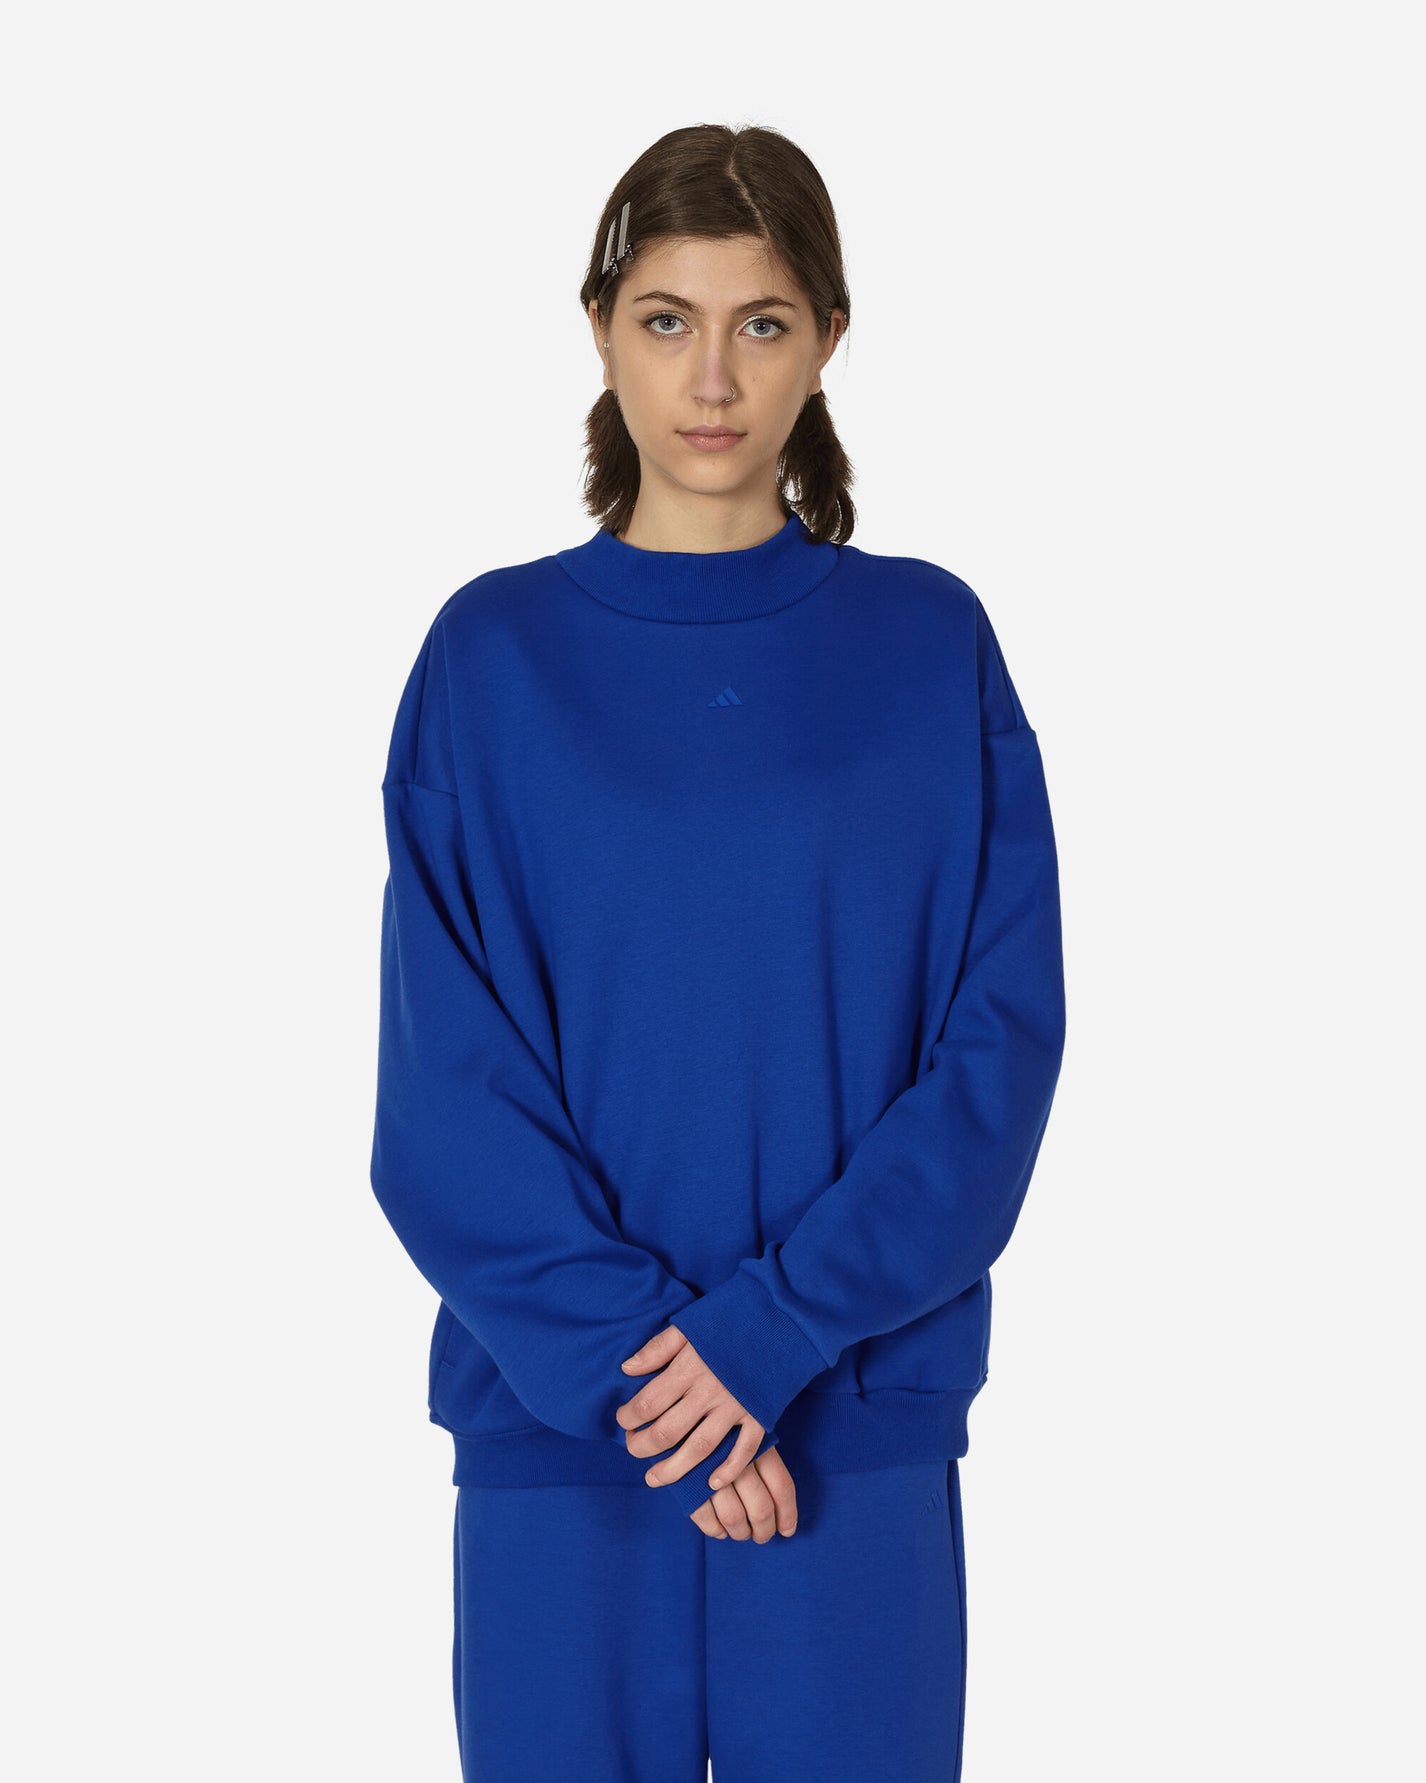 adidas One Fl Crew Lucid Blue Sweatshirts Crewneck IX1963 001